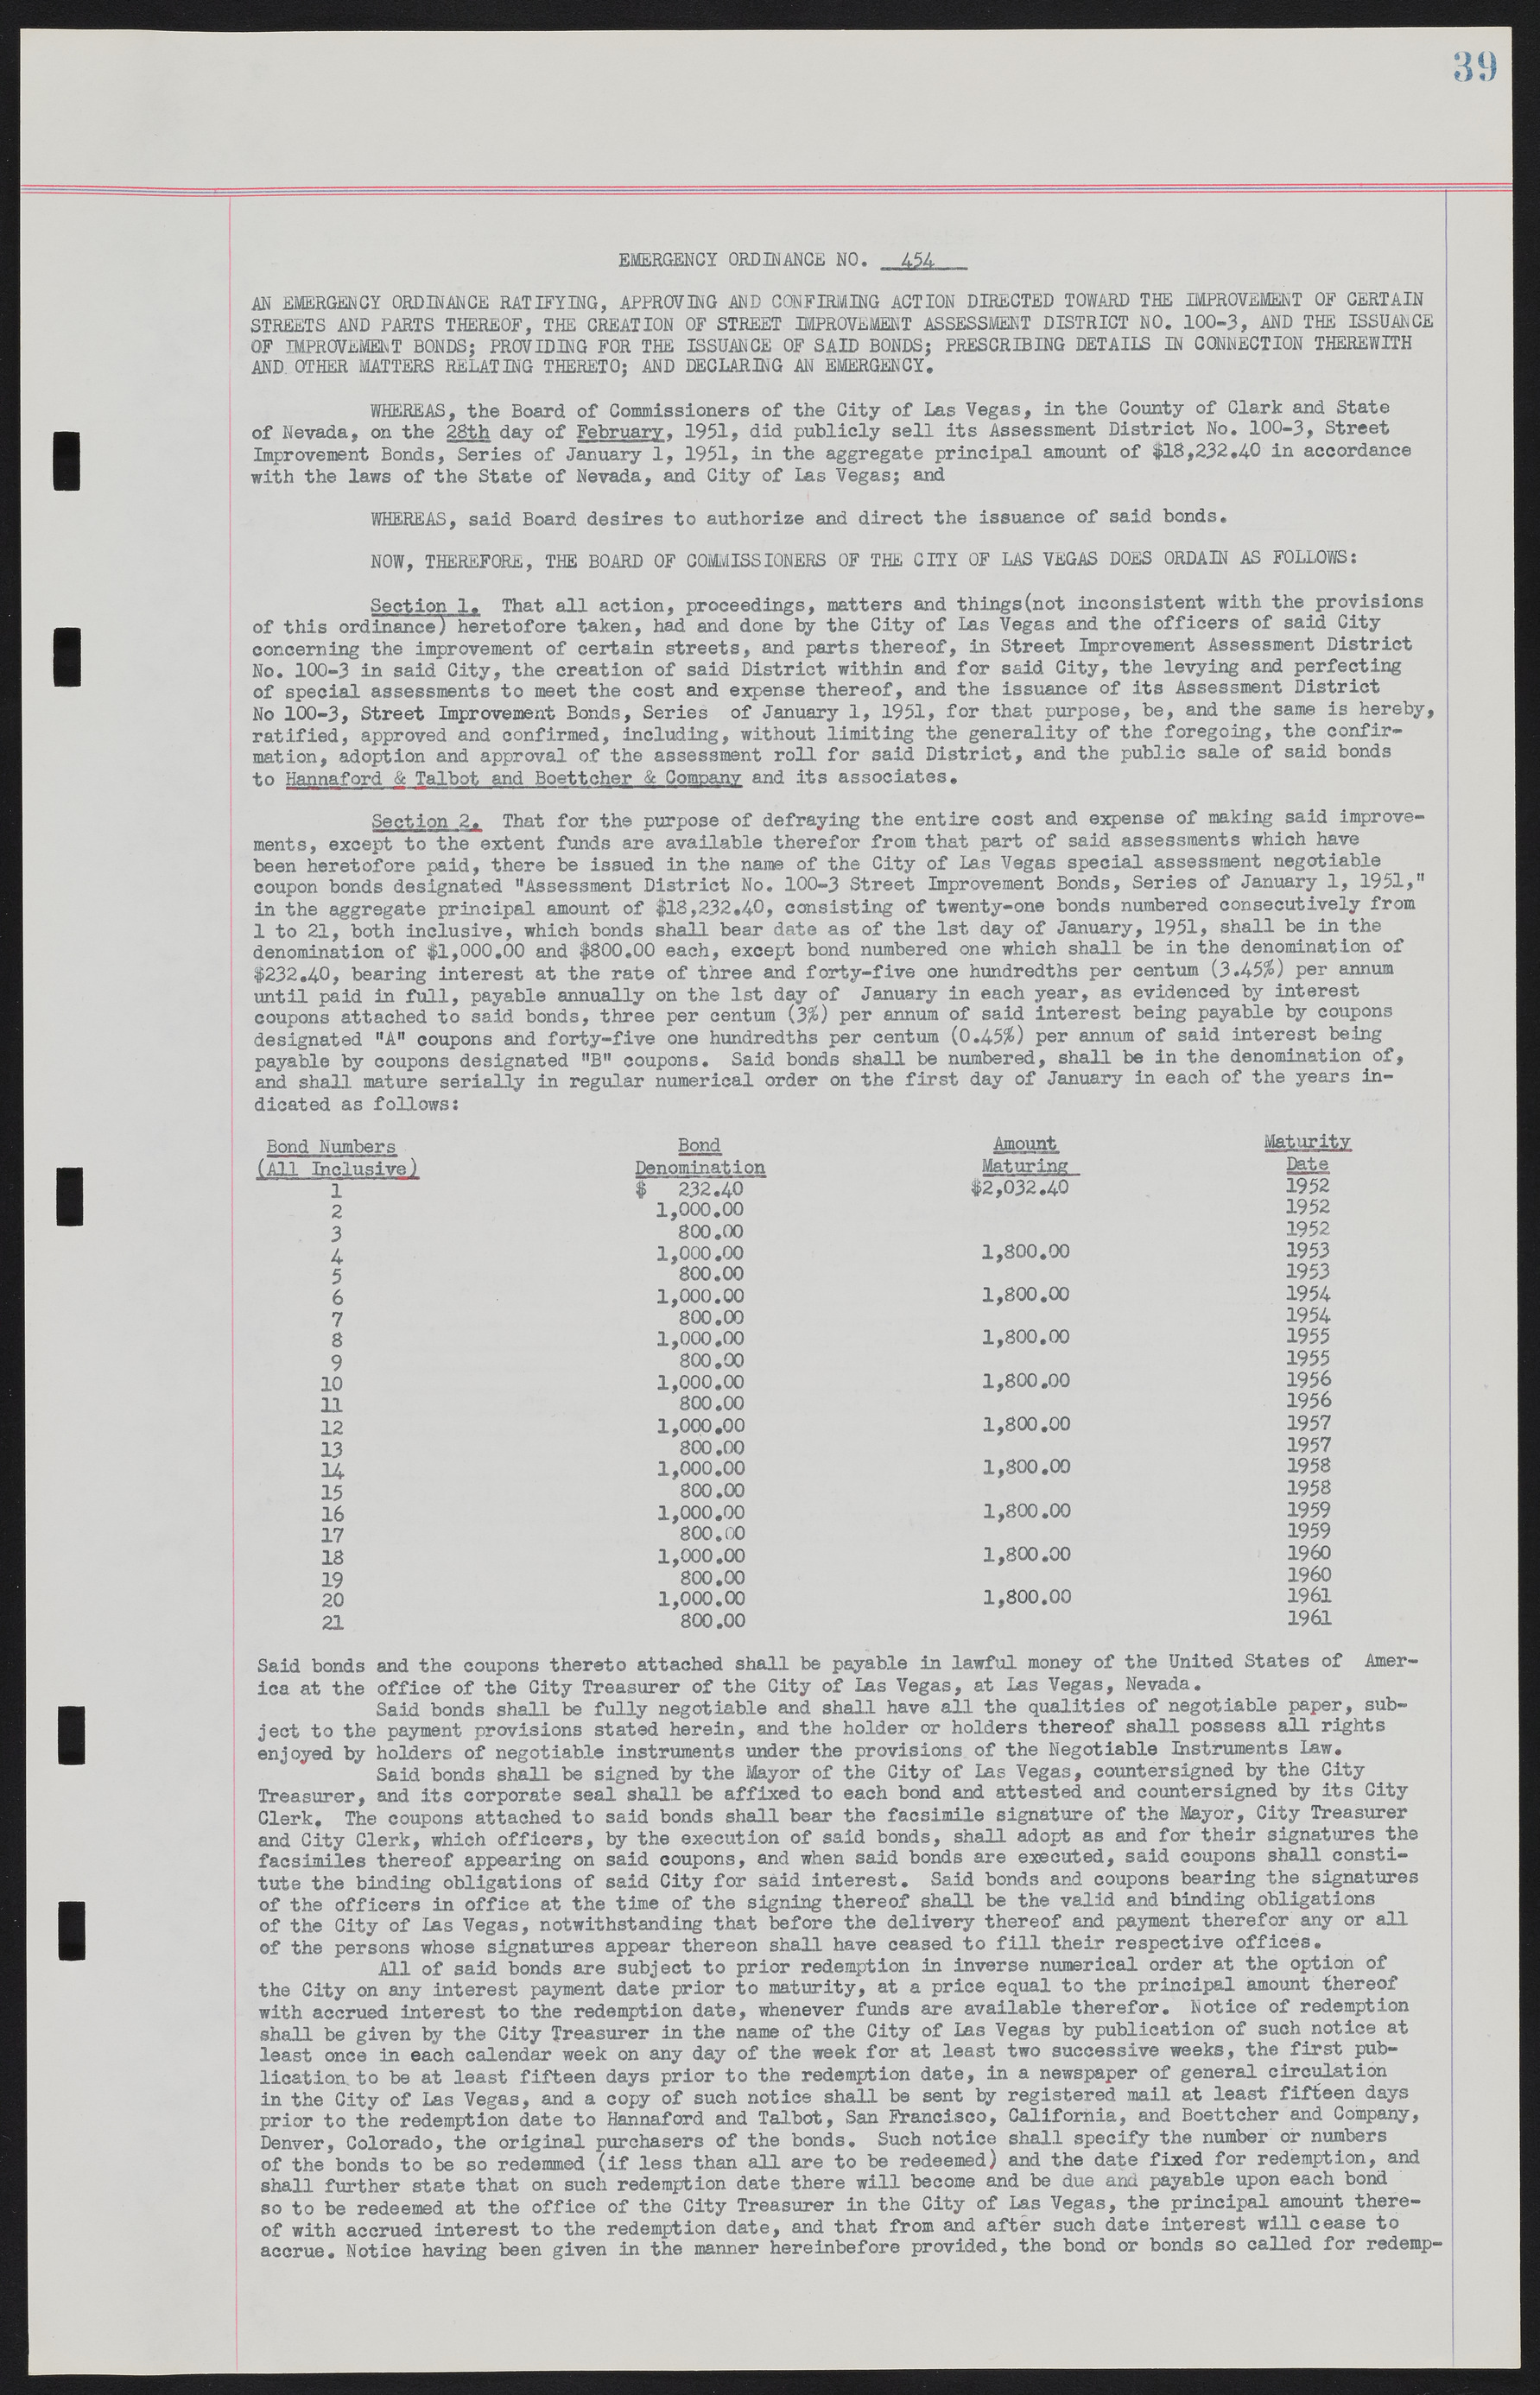 Las Vegas City Ordinances, November 13, 1950 to August 6, 1958, lvc000015-47